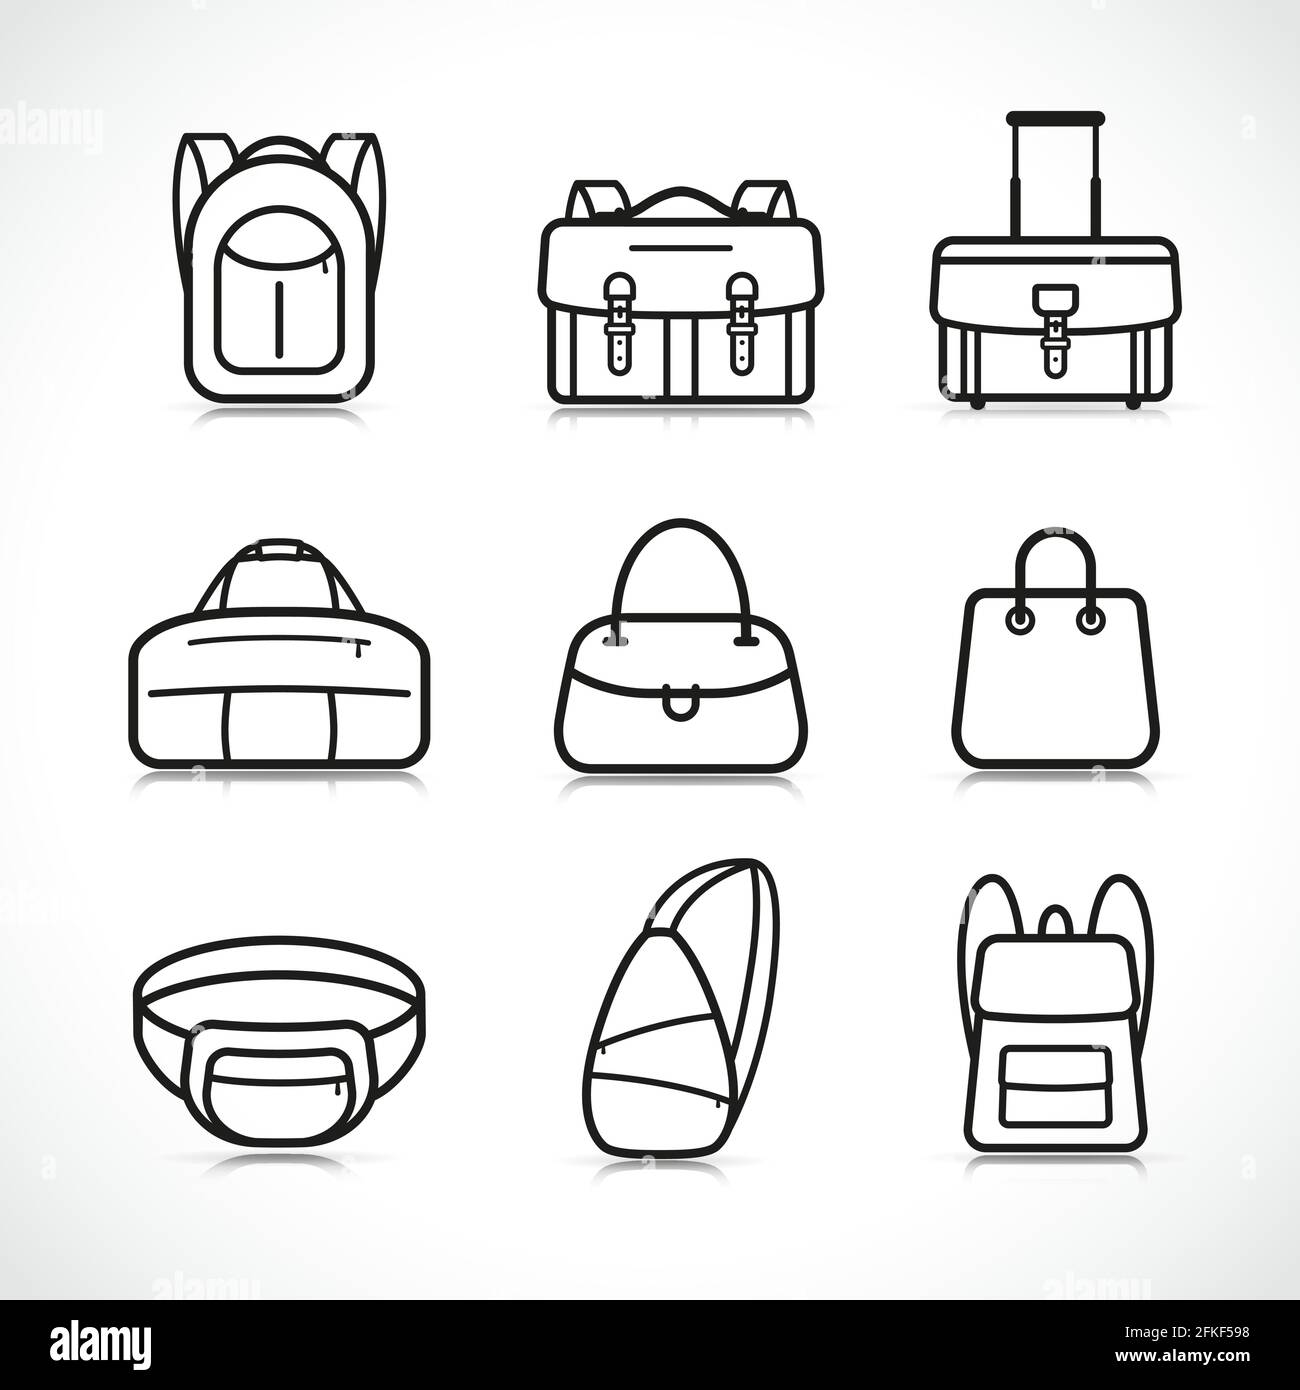 Vector illustration of bag icons design set Stock Vector